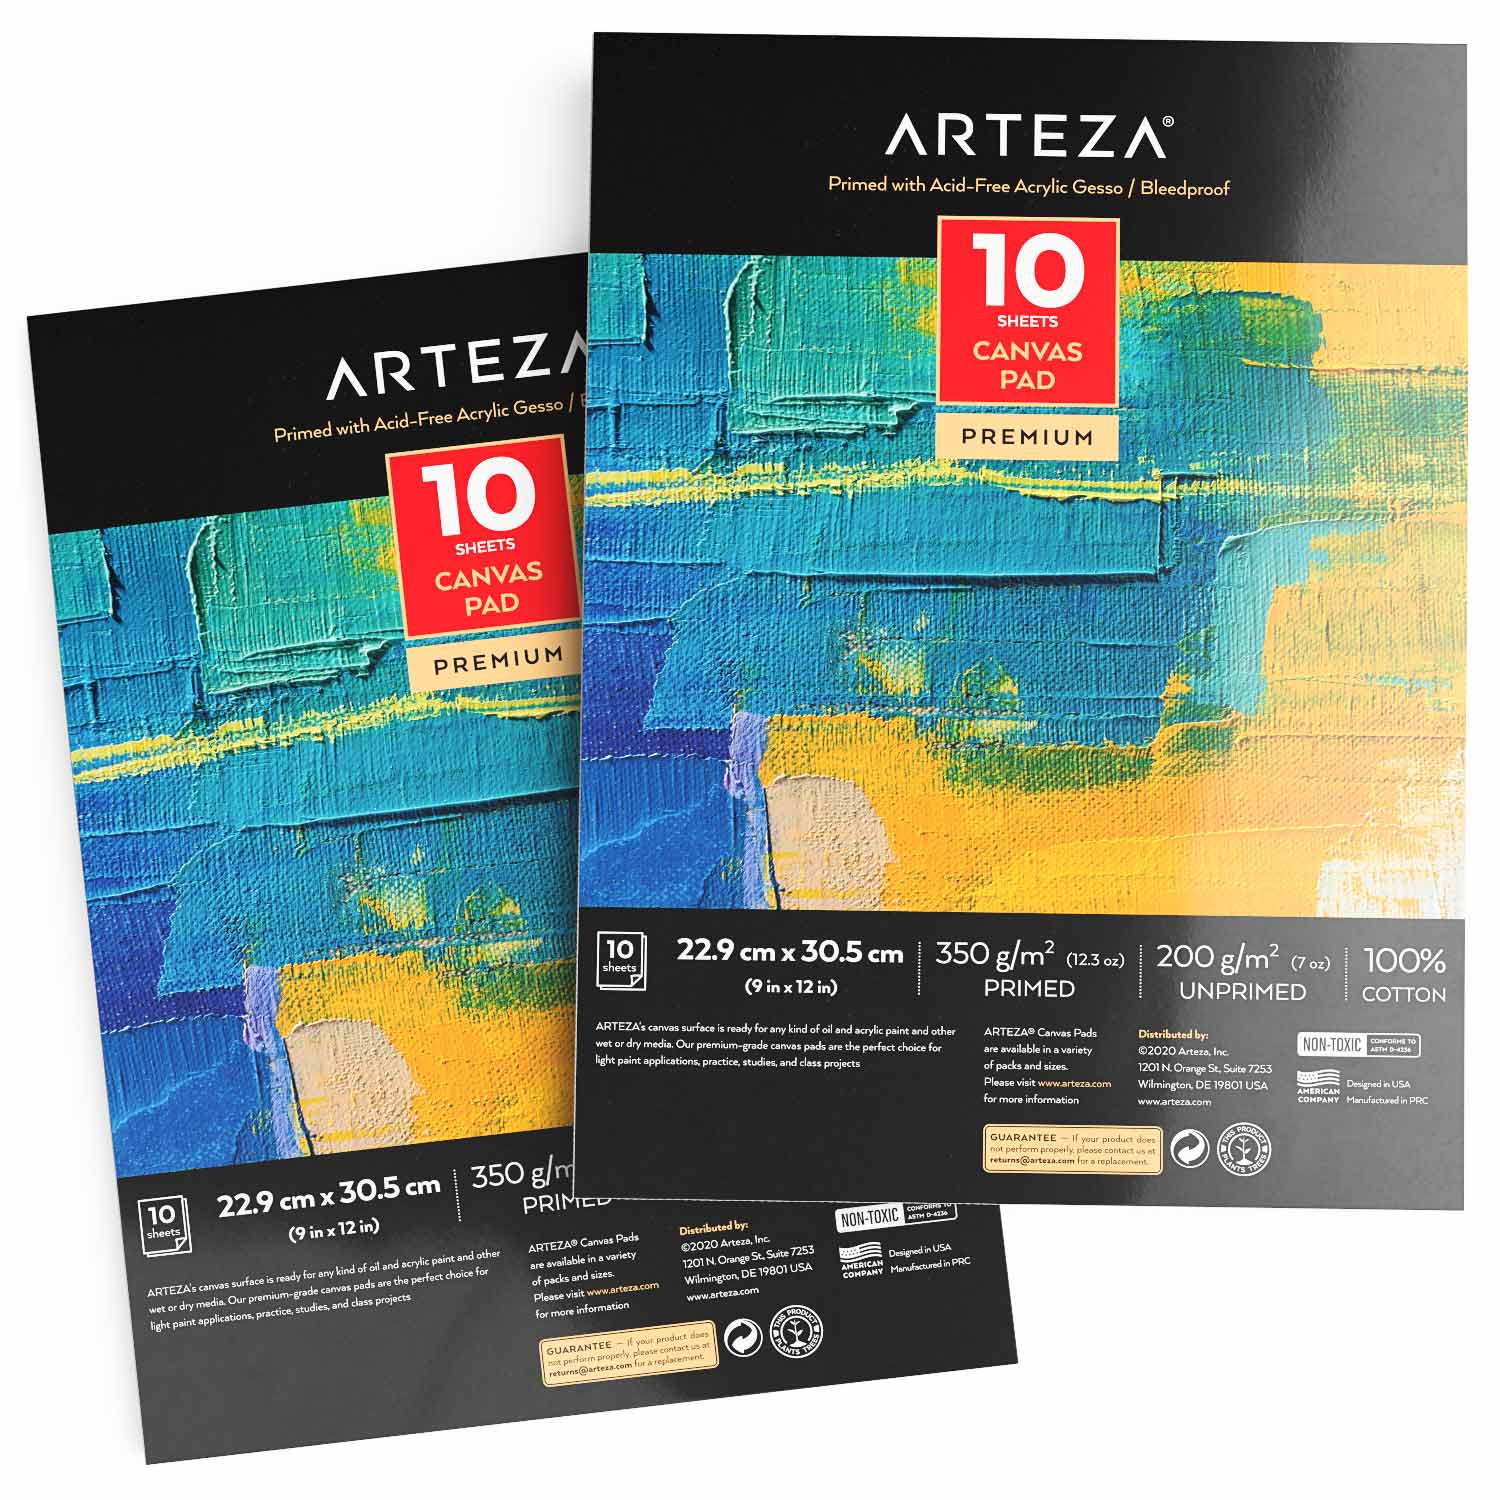 Arteza Canvas Paper Pad, 9 inchx12 inch, White, 10 Sheets - 2 Pack